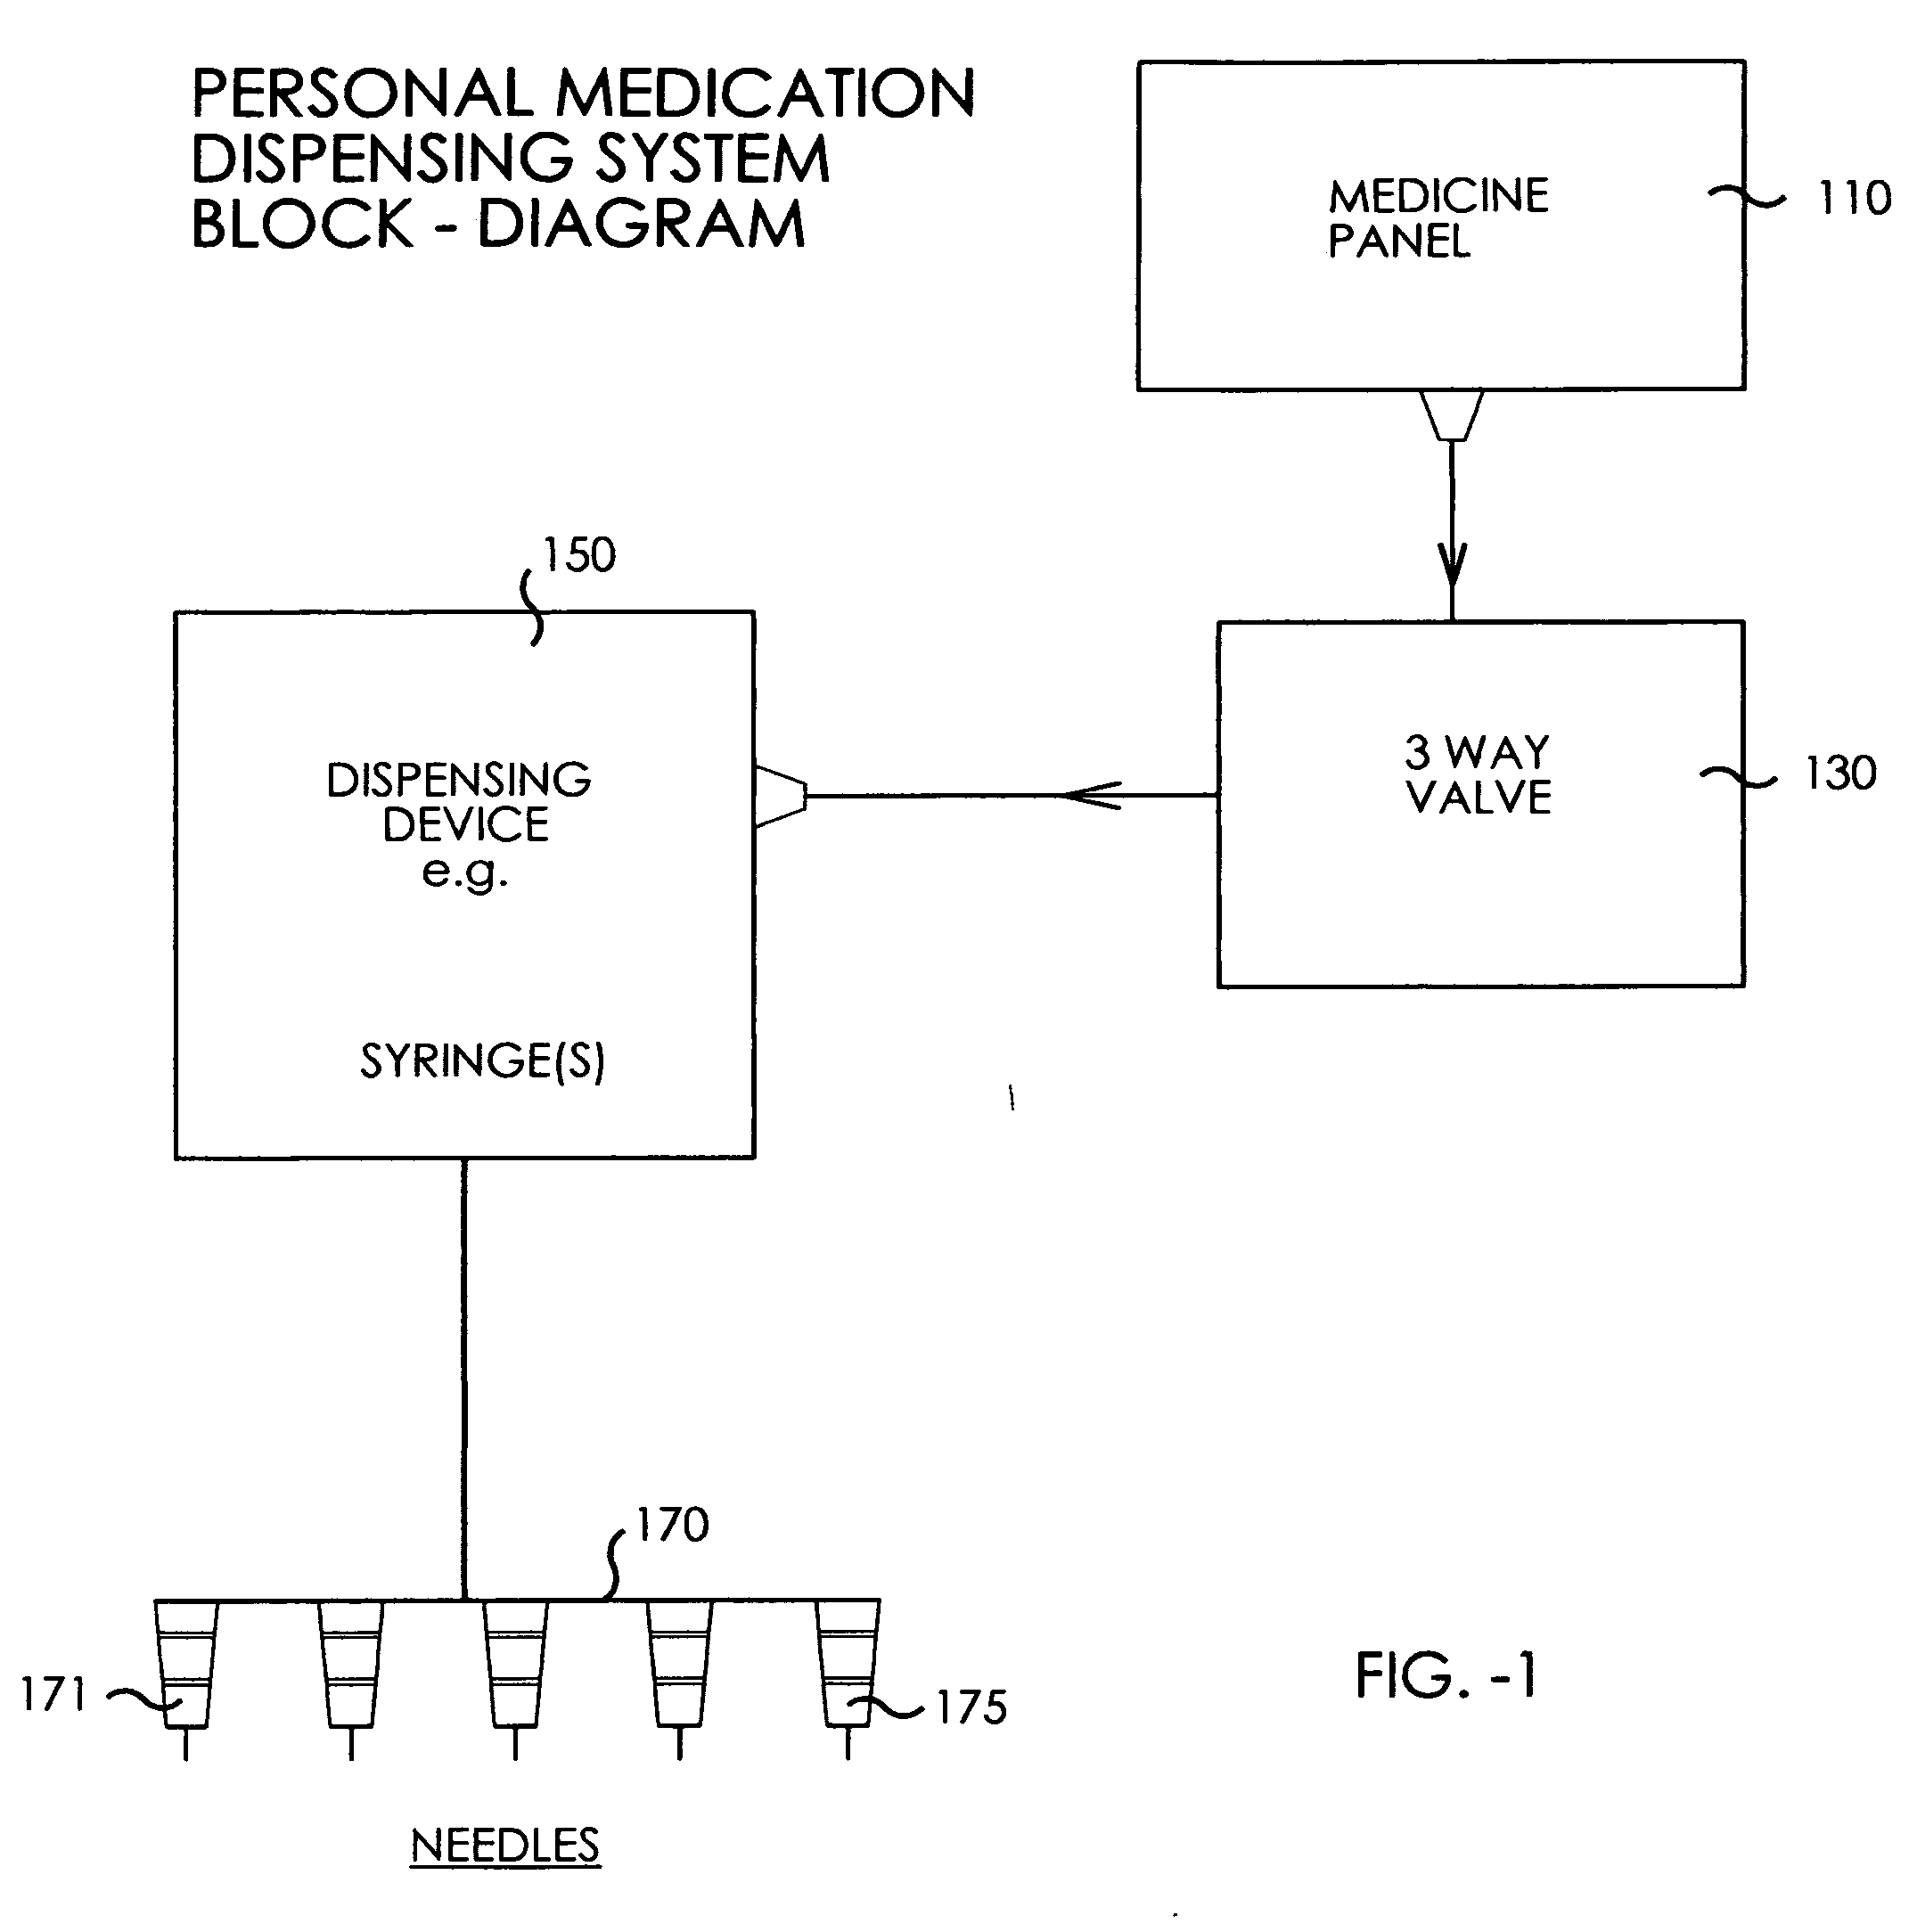 Personal medication dispensing system